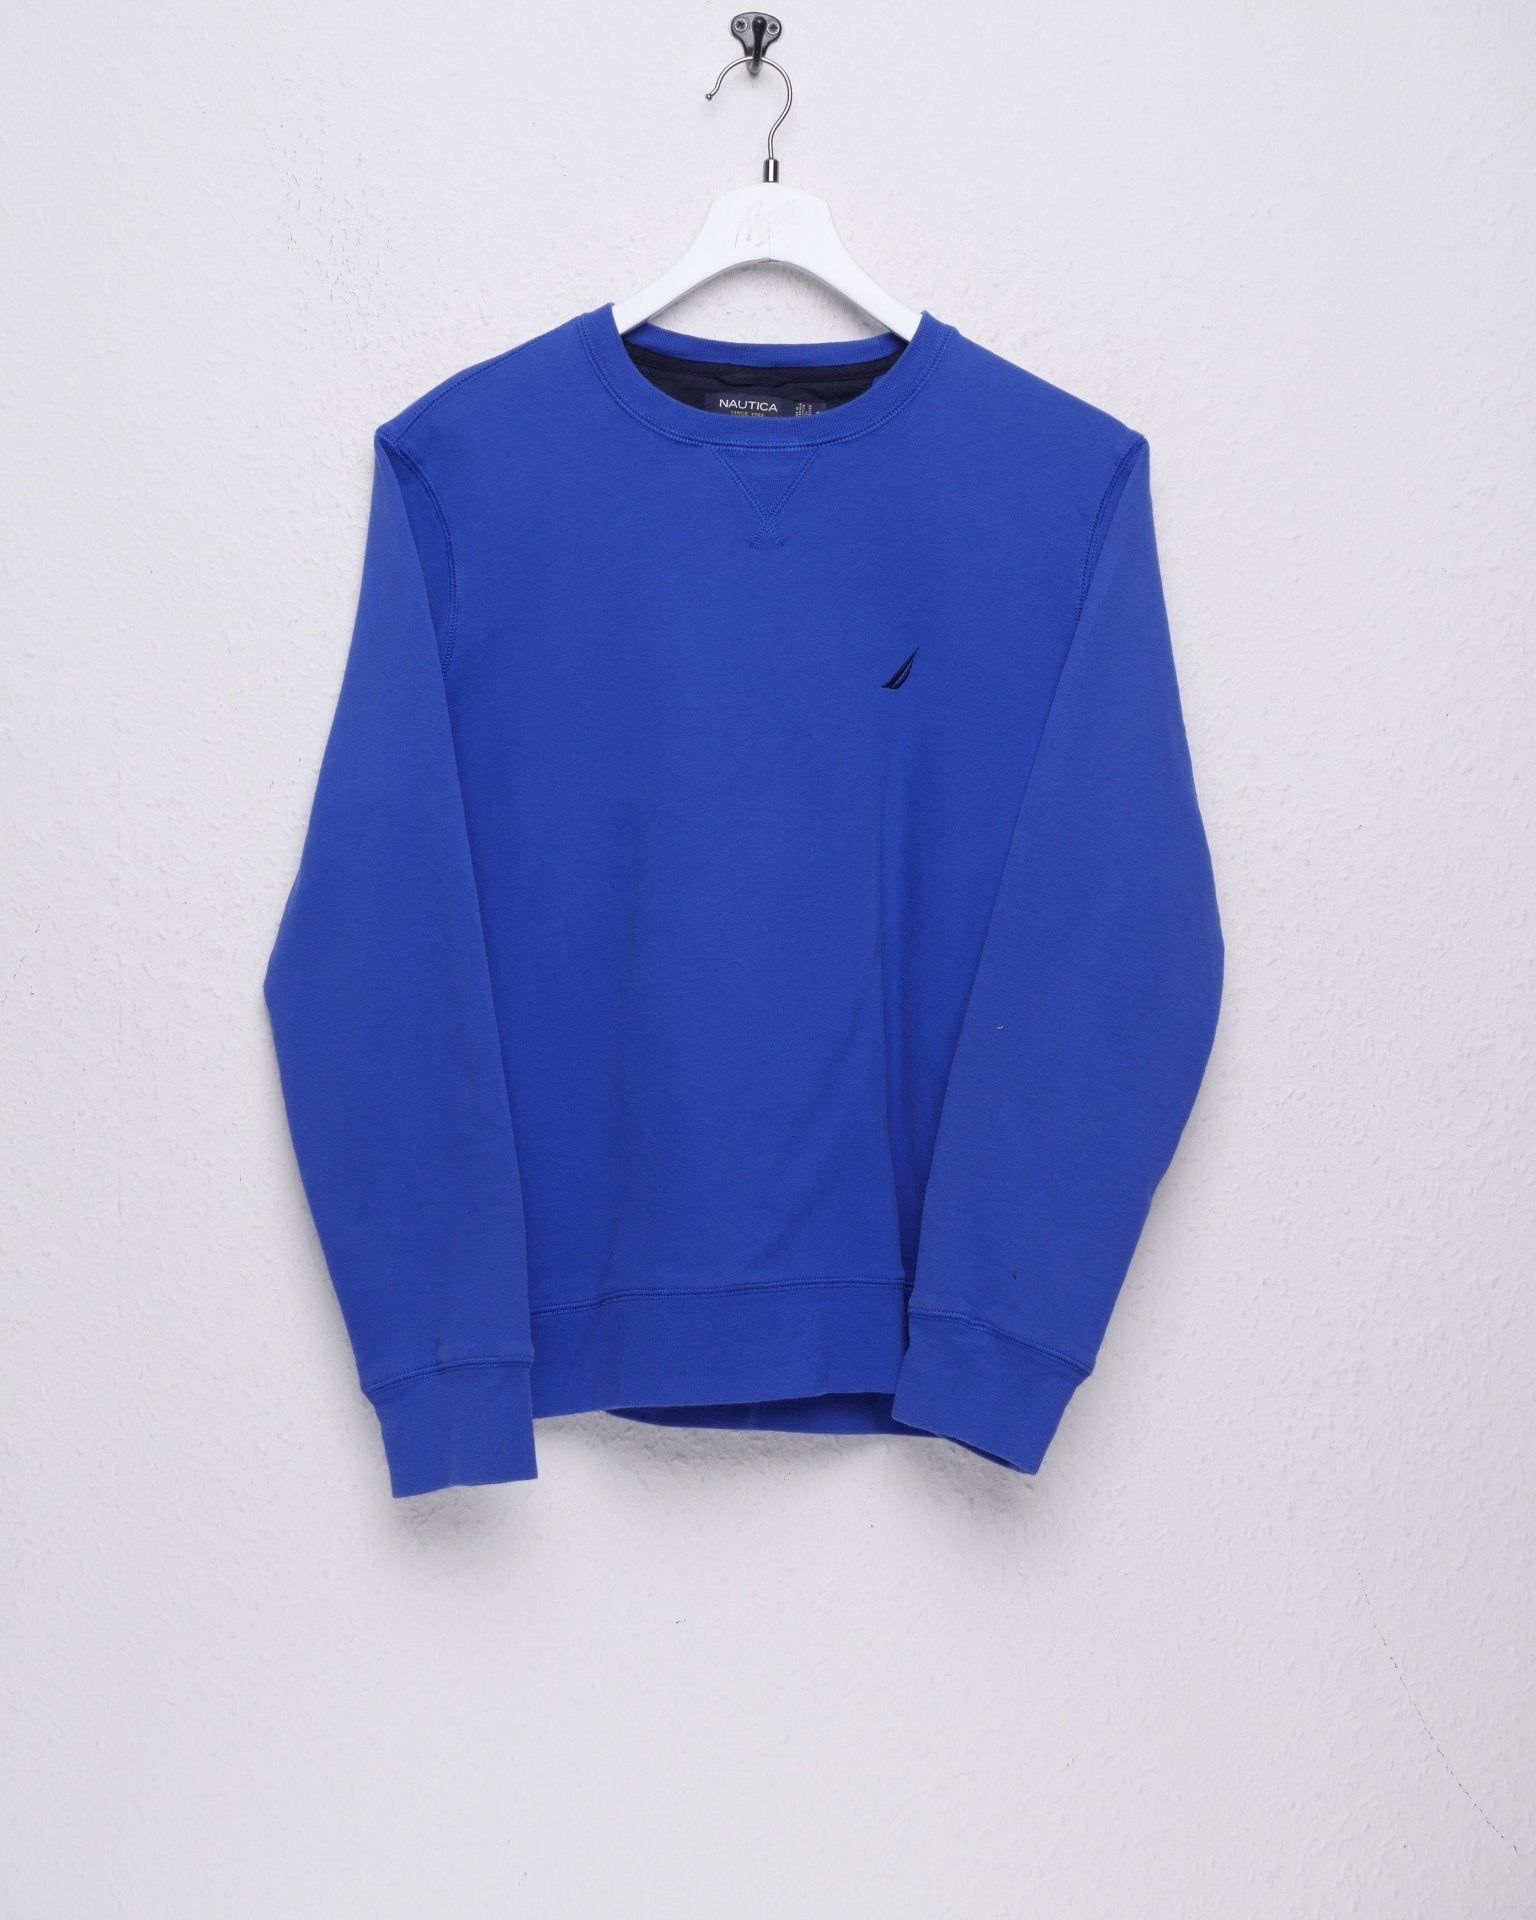 Nautica embroidered Logo blue Sweater - Peeces